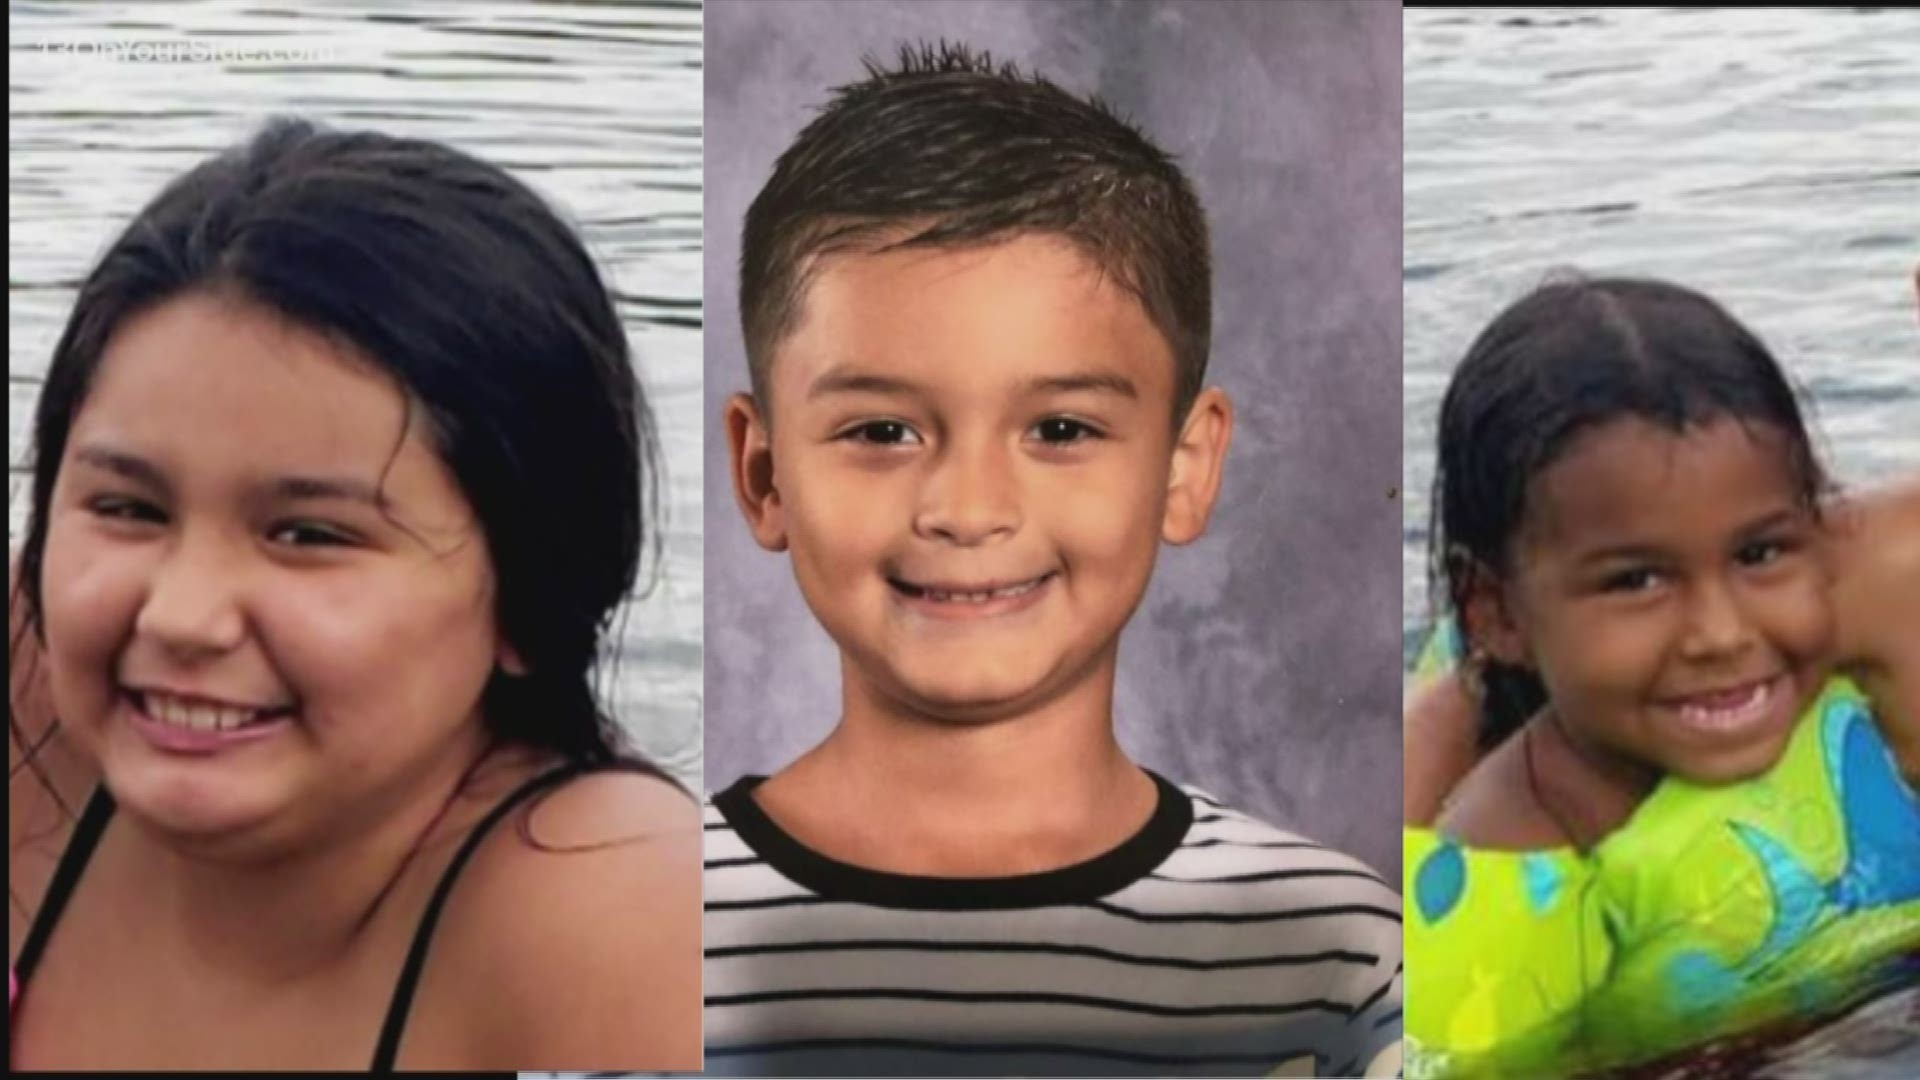 Missing kids found in Ottawa County